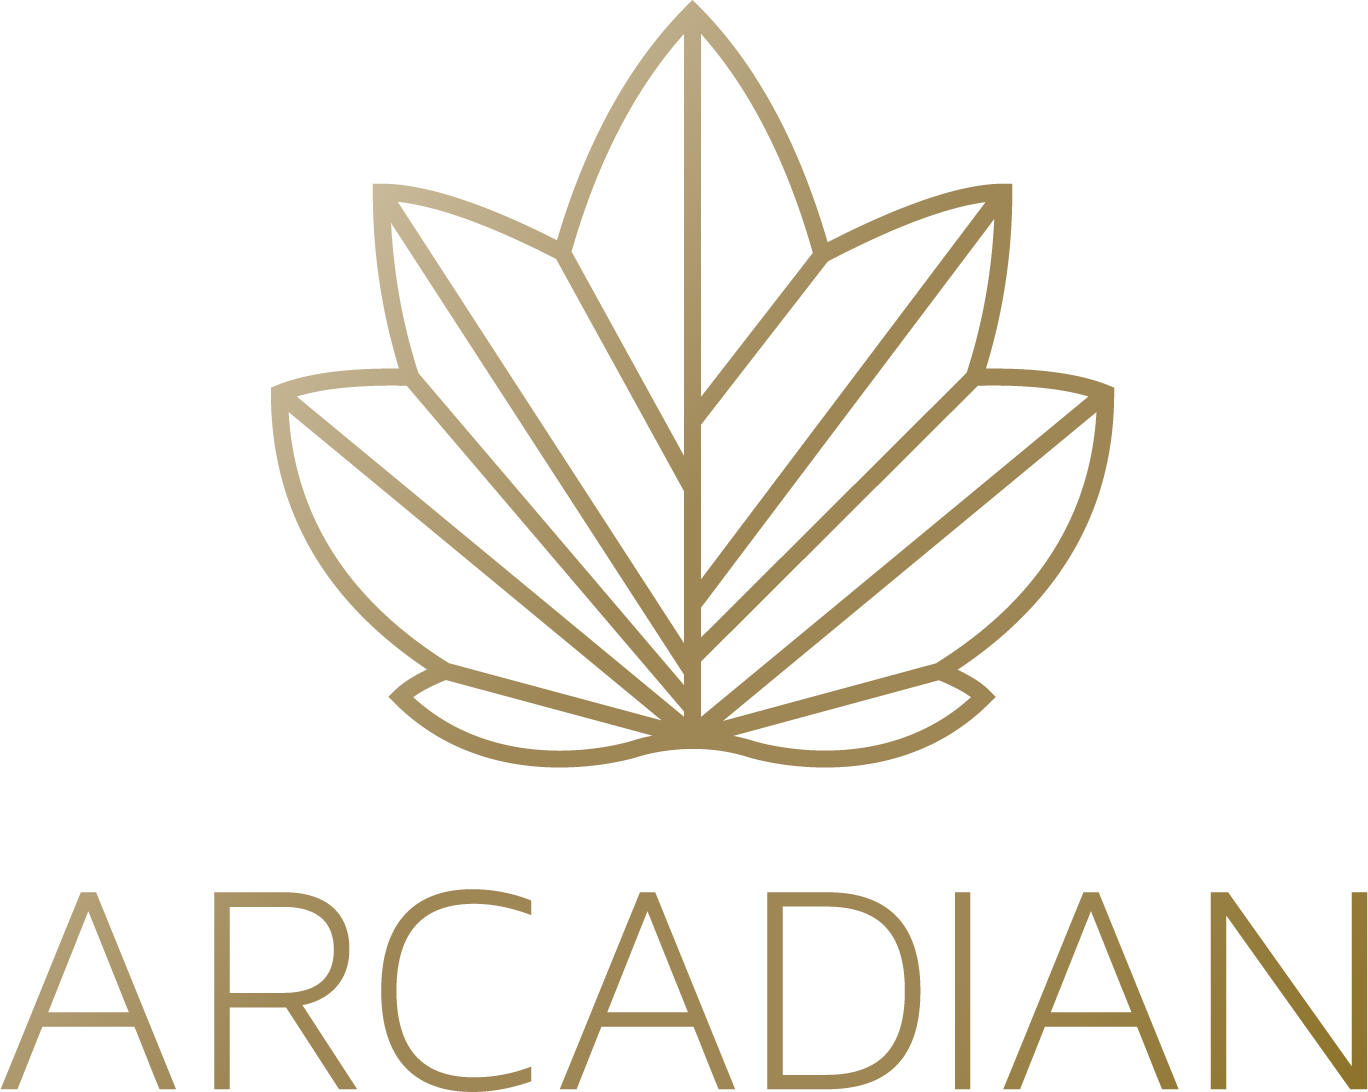 The Arcadian Logo